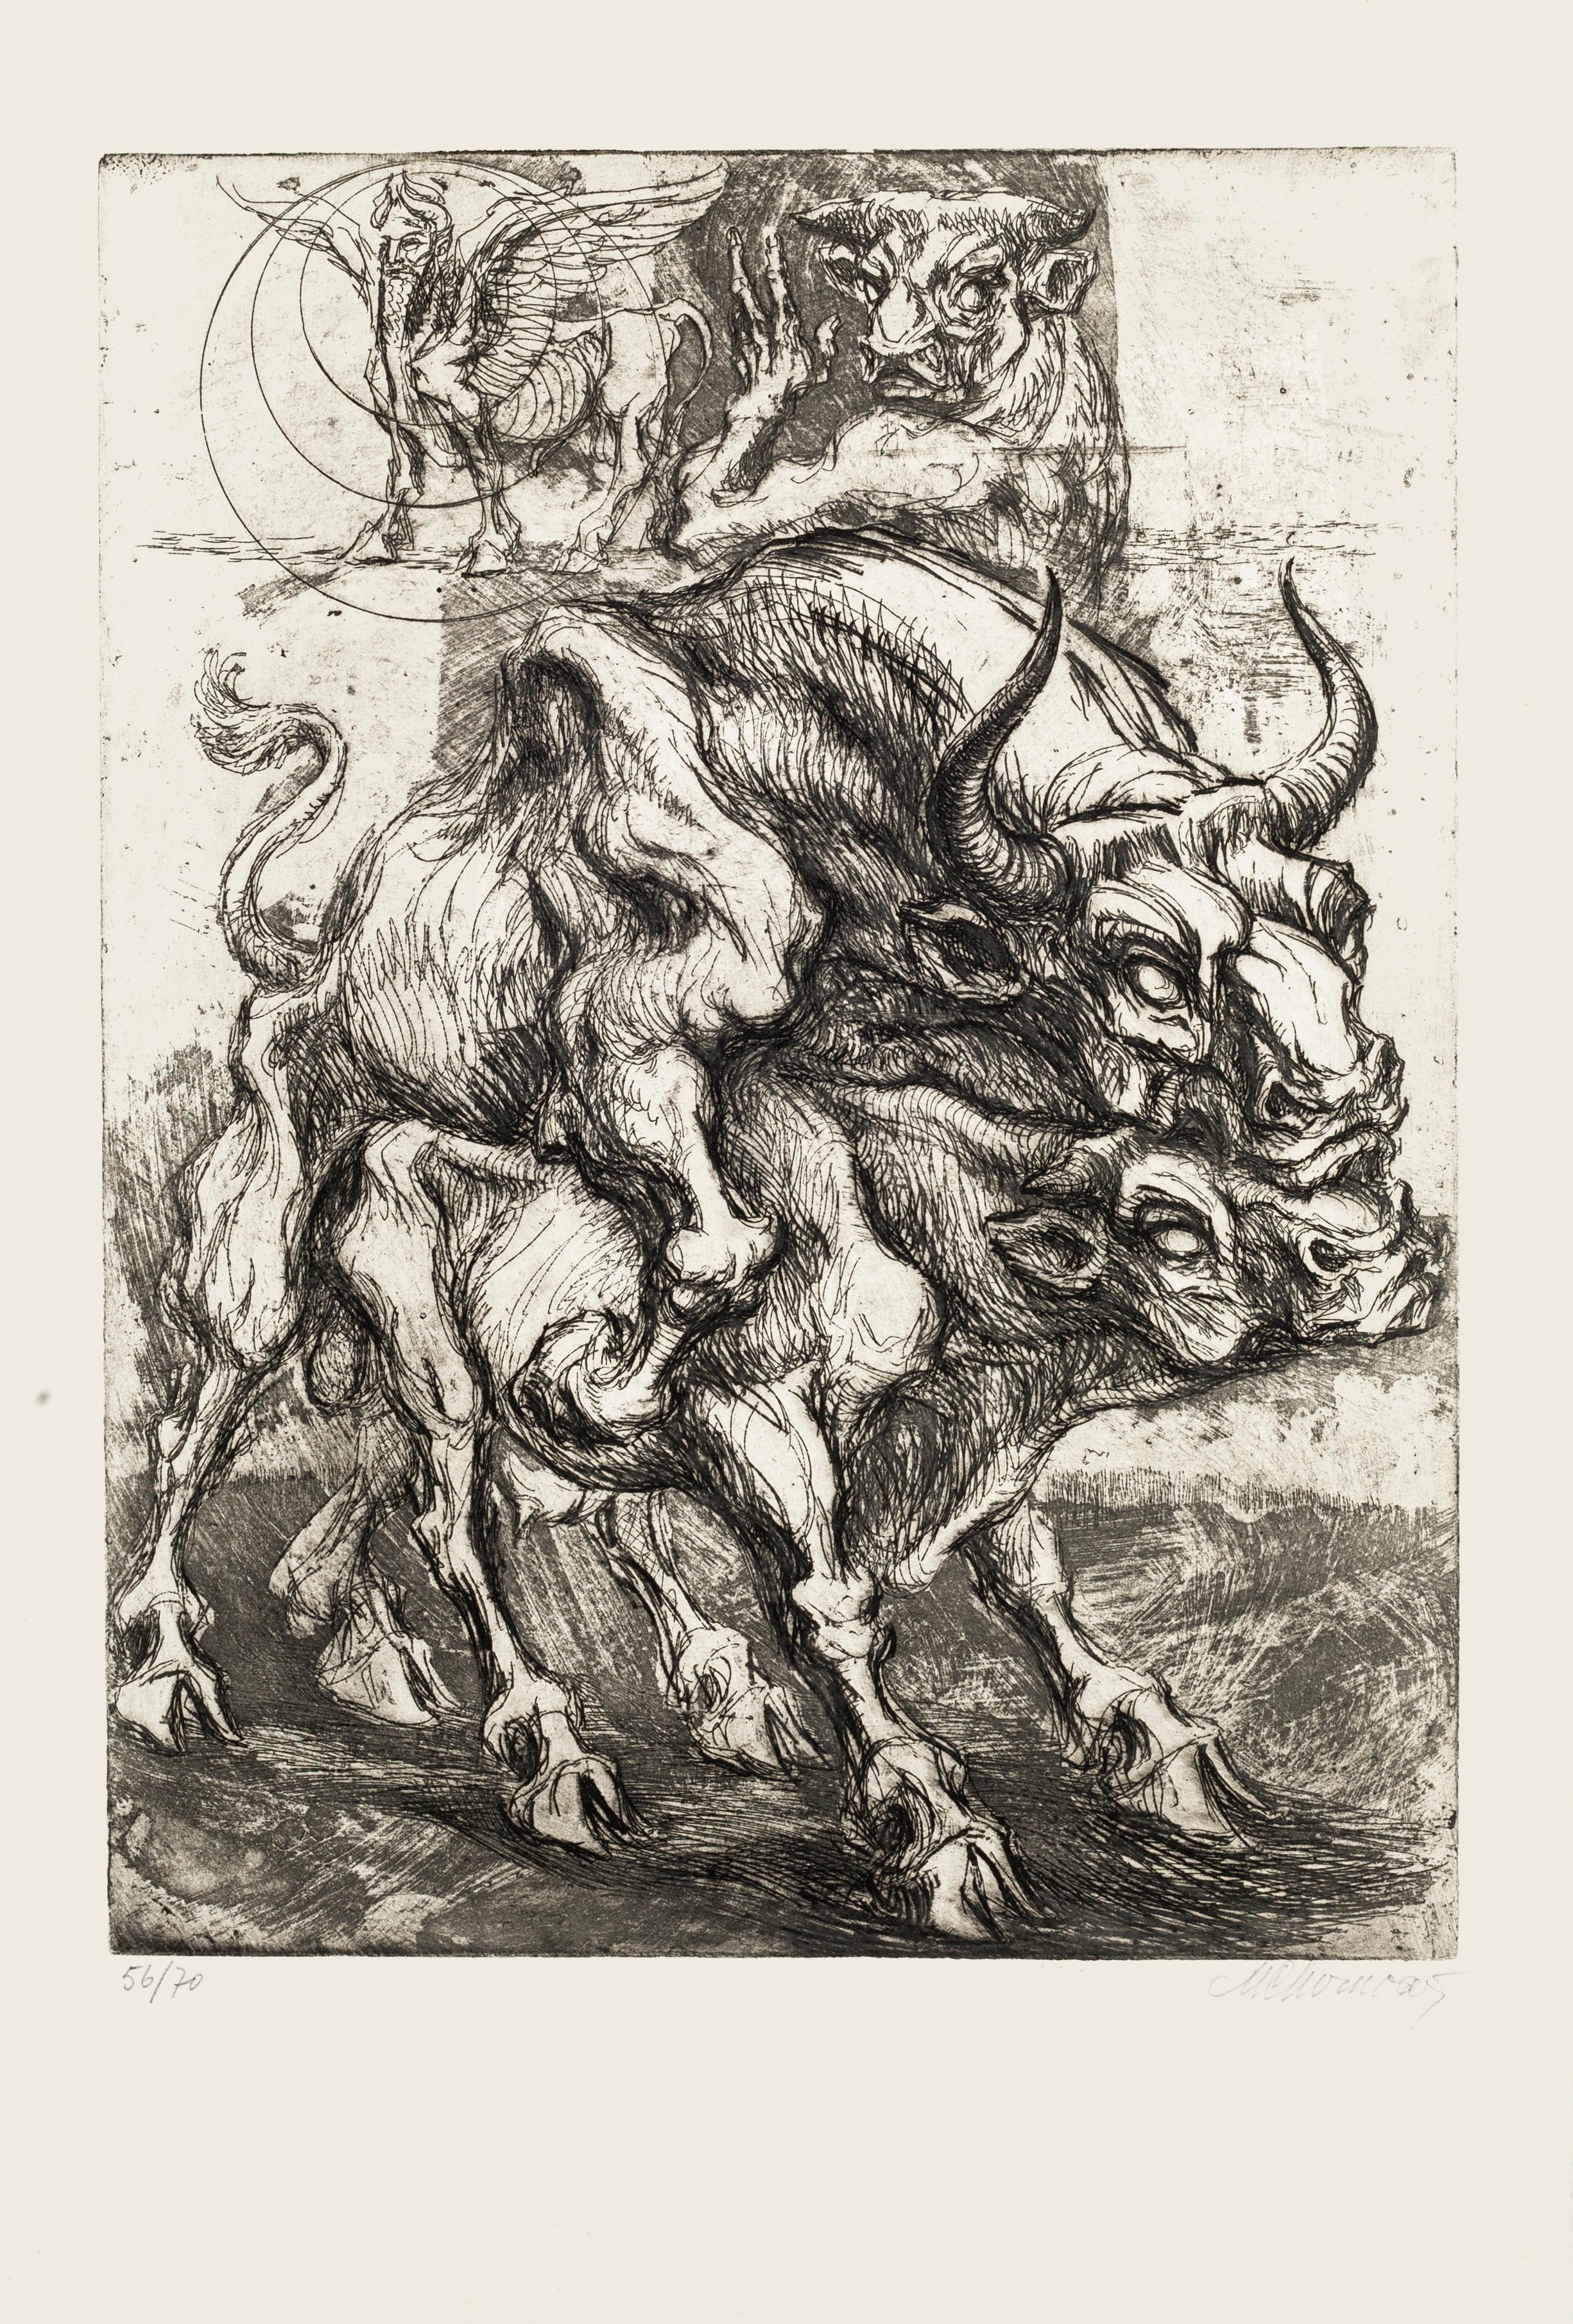 Bulls - Gravure originale de M. Chirnoaga - fin du XXe siècle